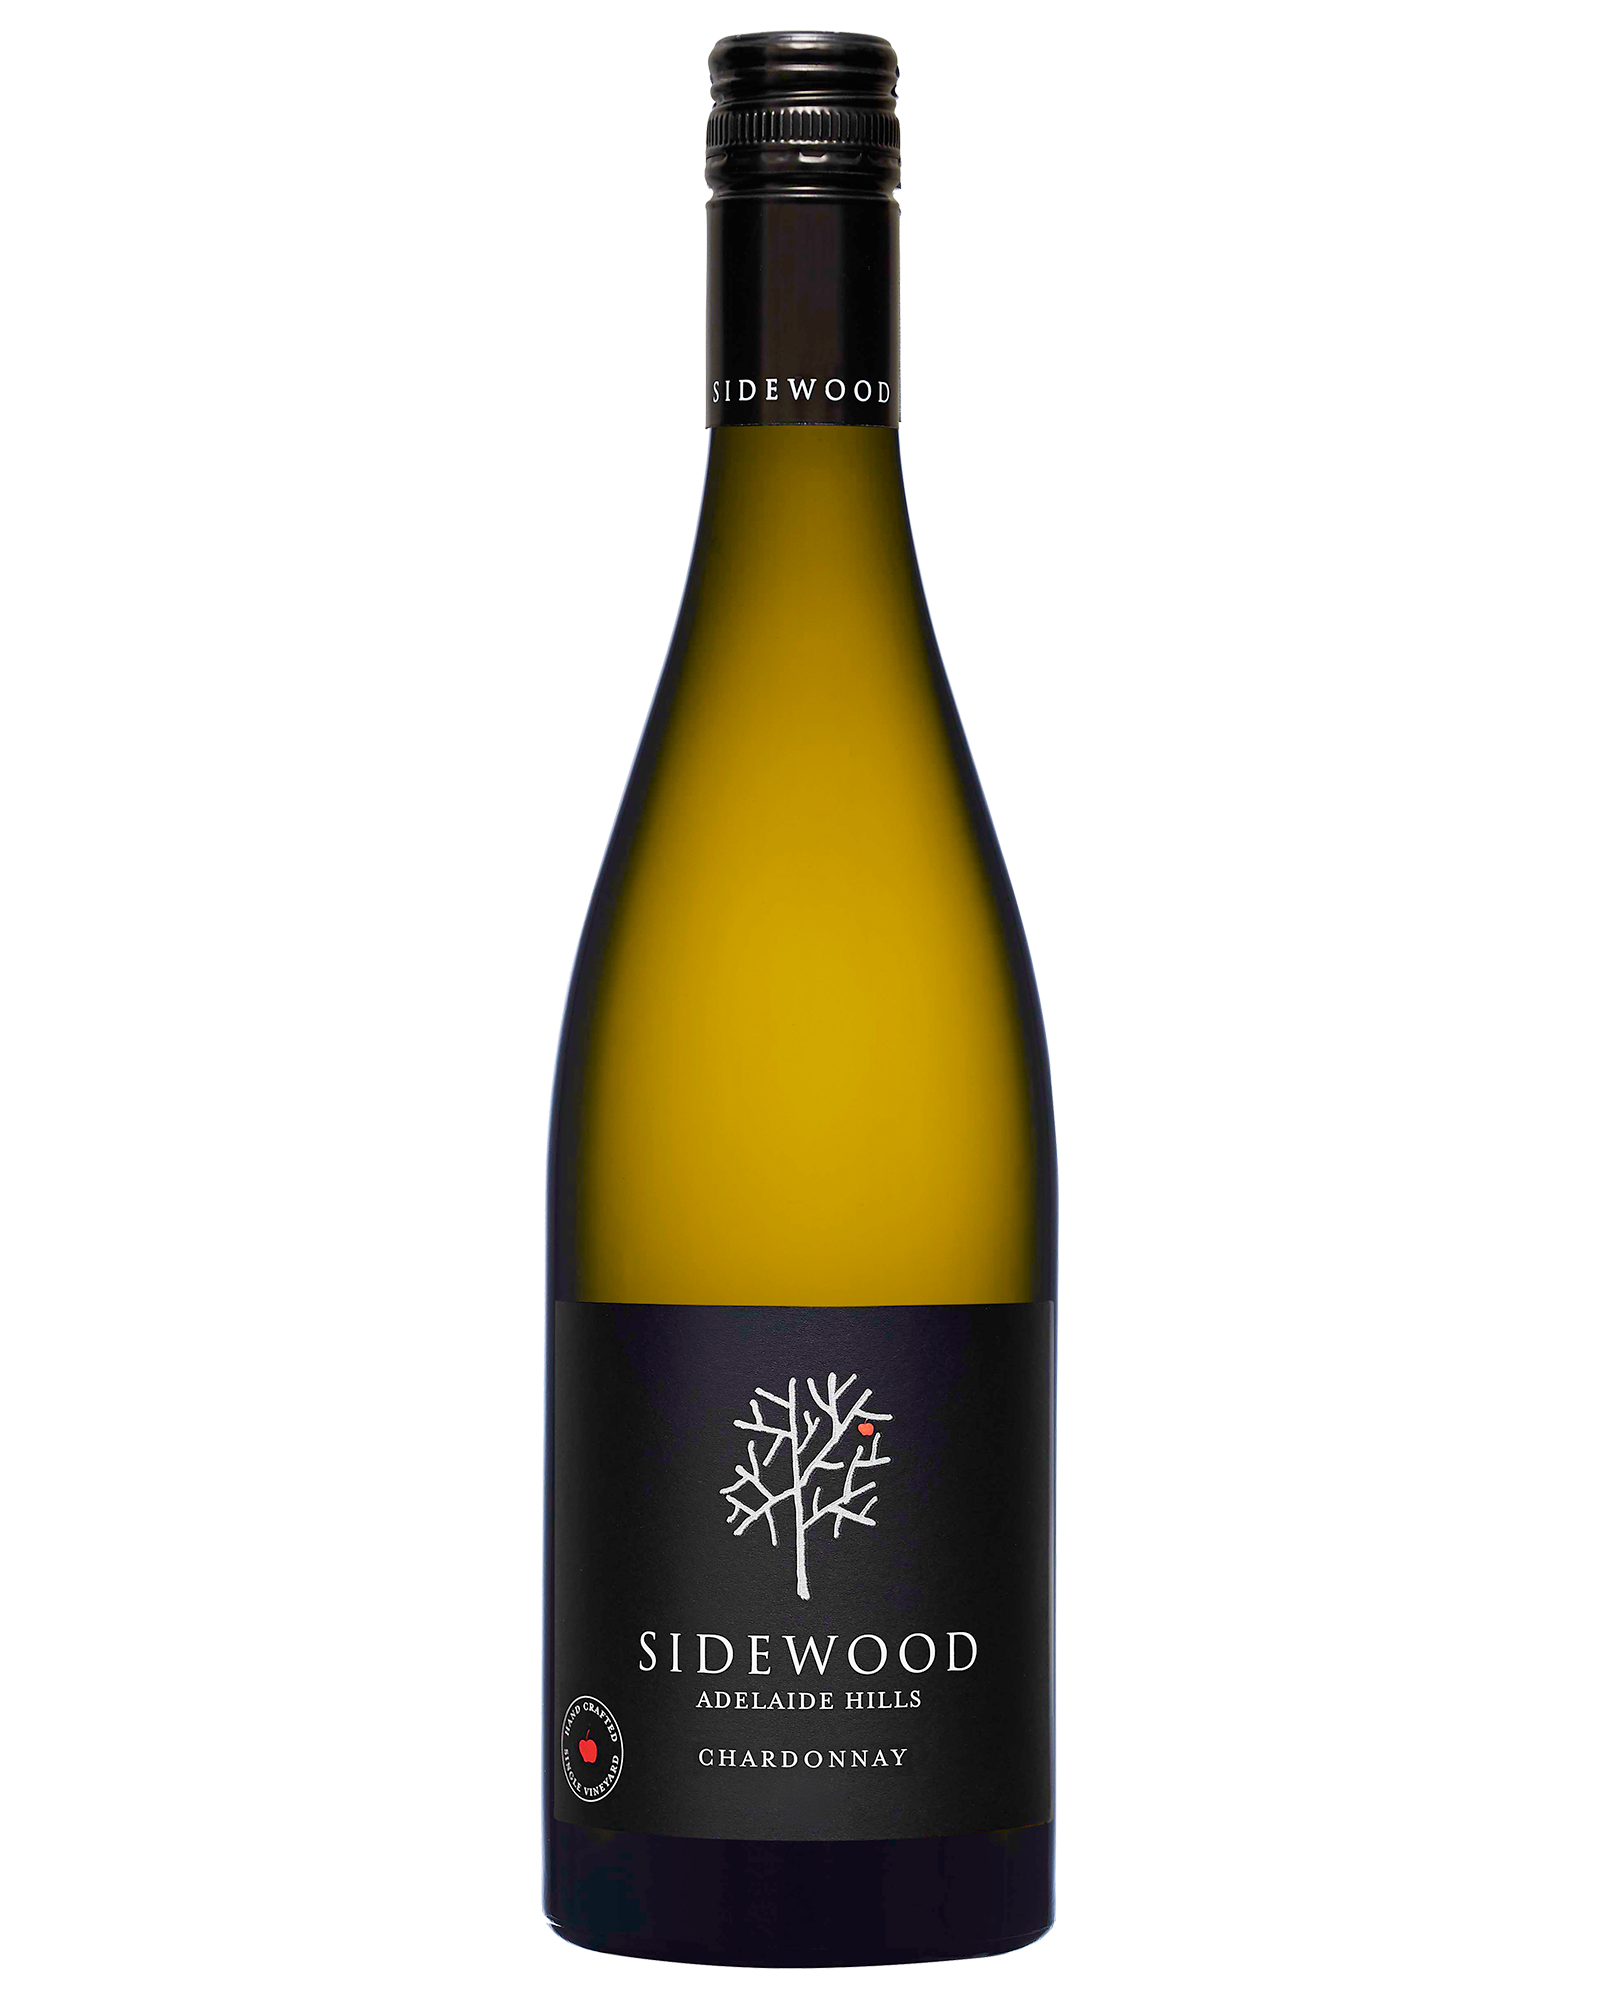 Sidewood Adelaide Hills Chardonnay